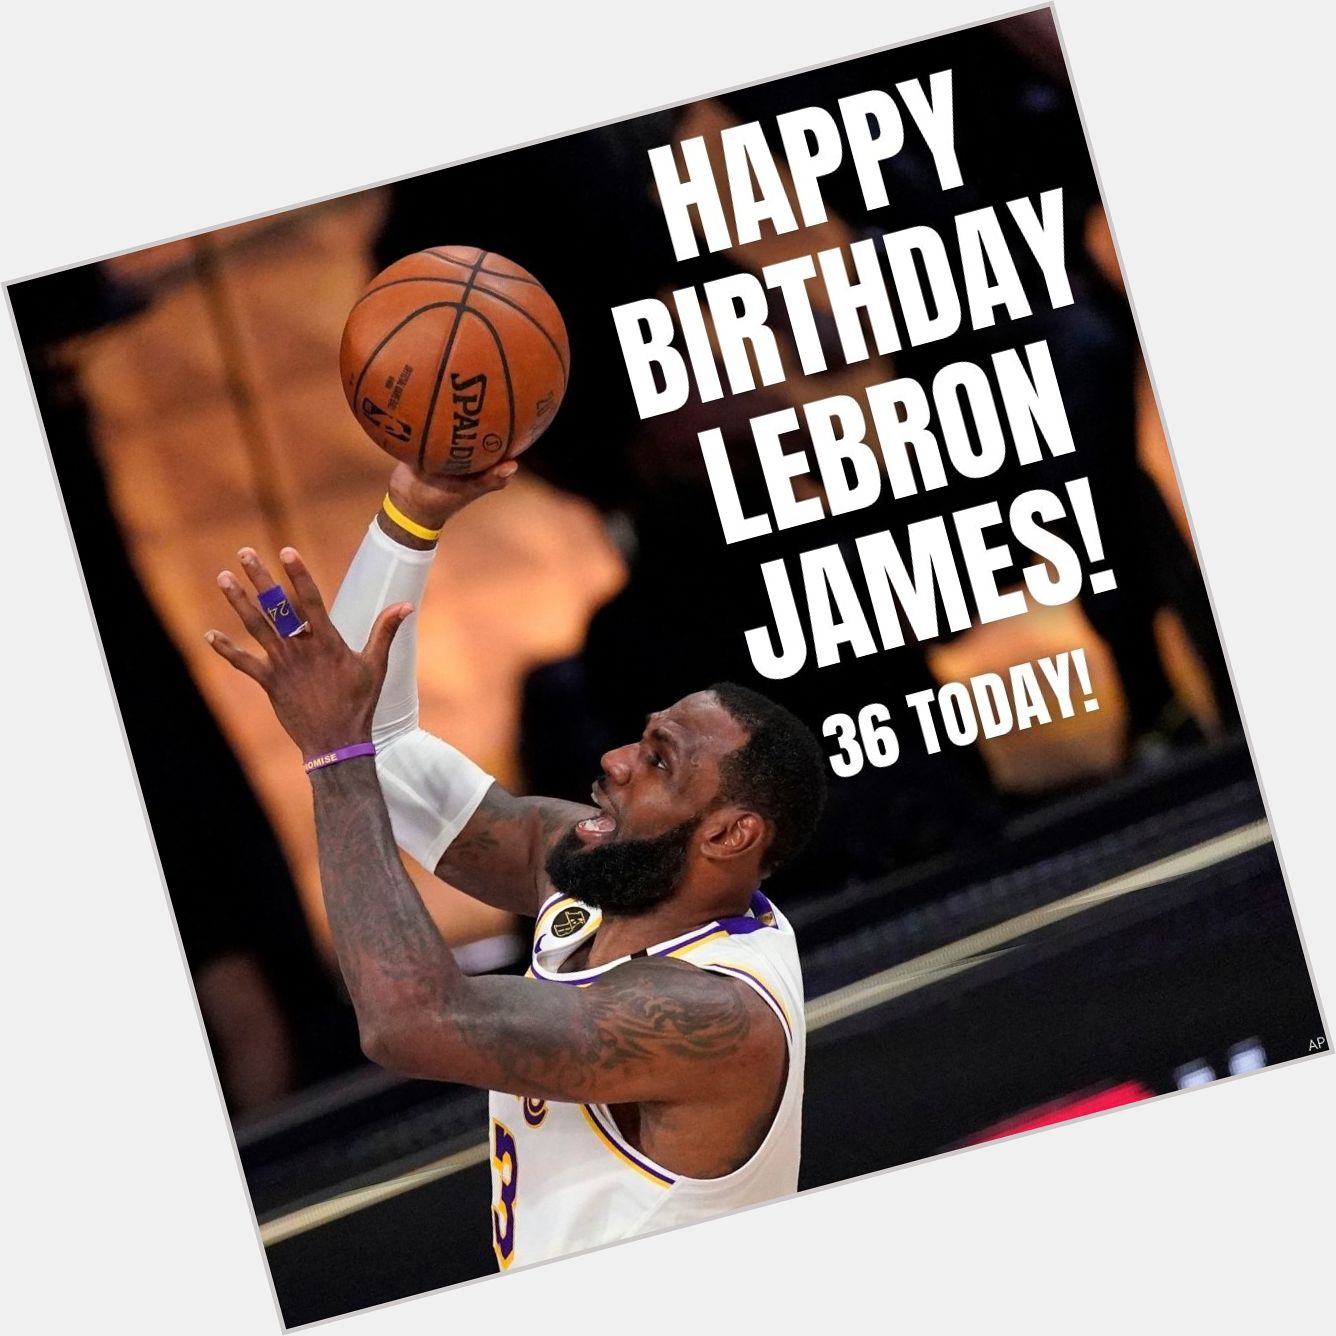 Happy Birthday LeBron James! The NBA star is celebrating his 36th birthday today. 